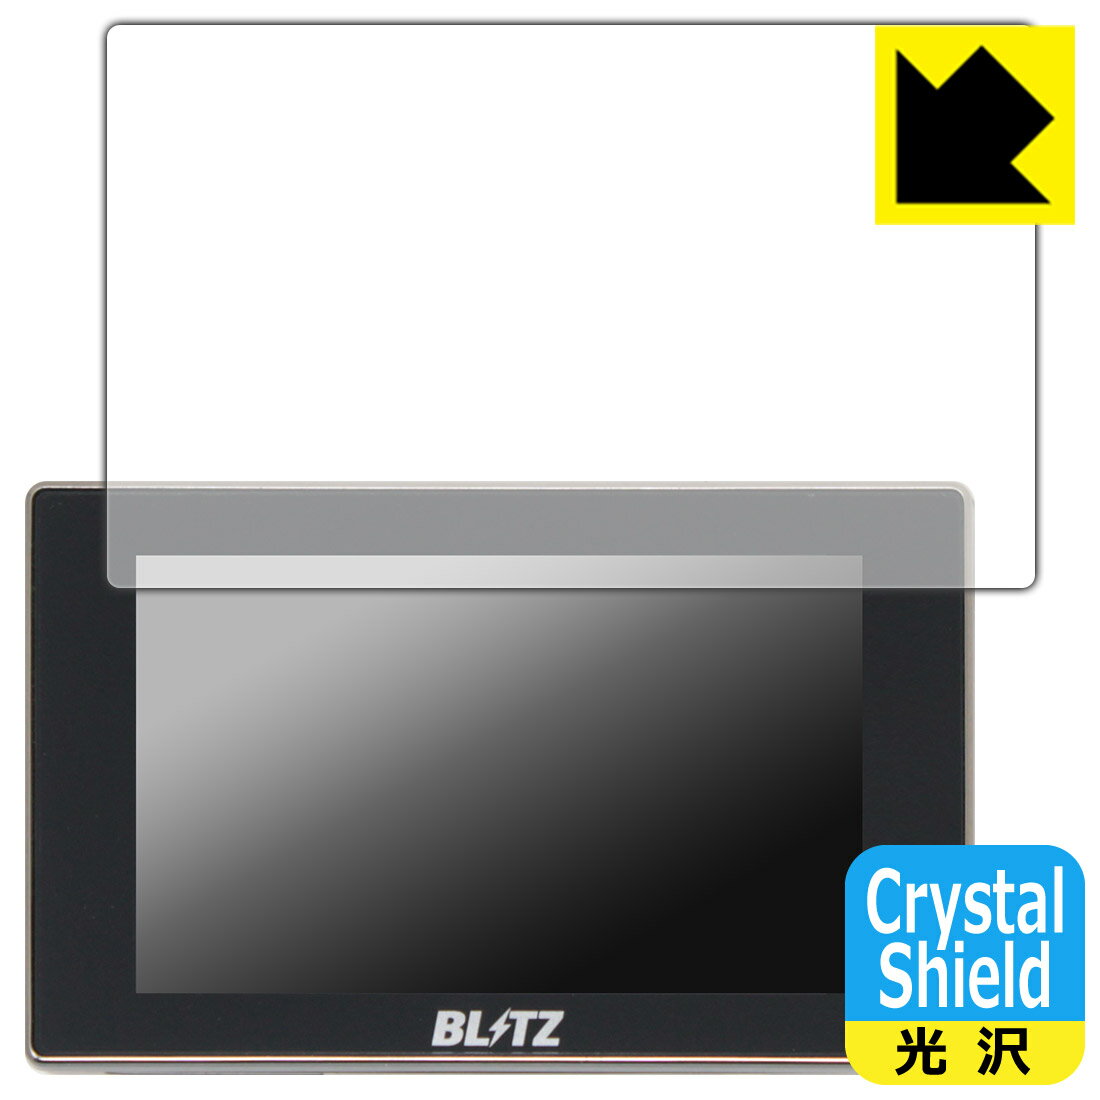 Crystal ShieldyzیtB BLITZ Touch-B.R.A.I.N. LASER TL313S/TL312S/TL311S { А